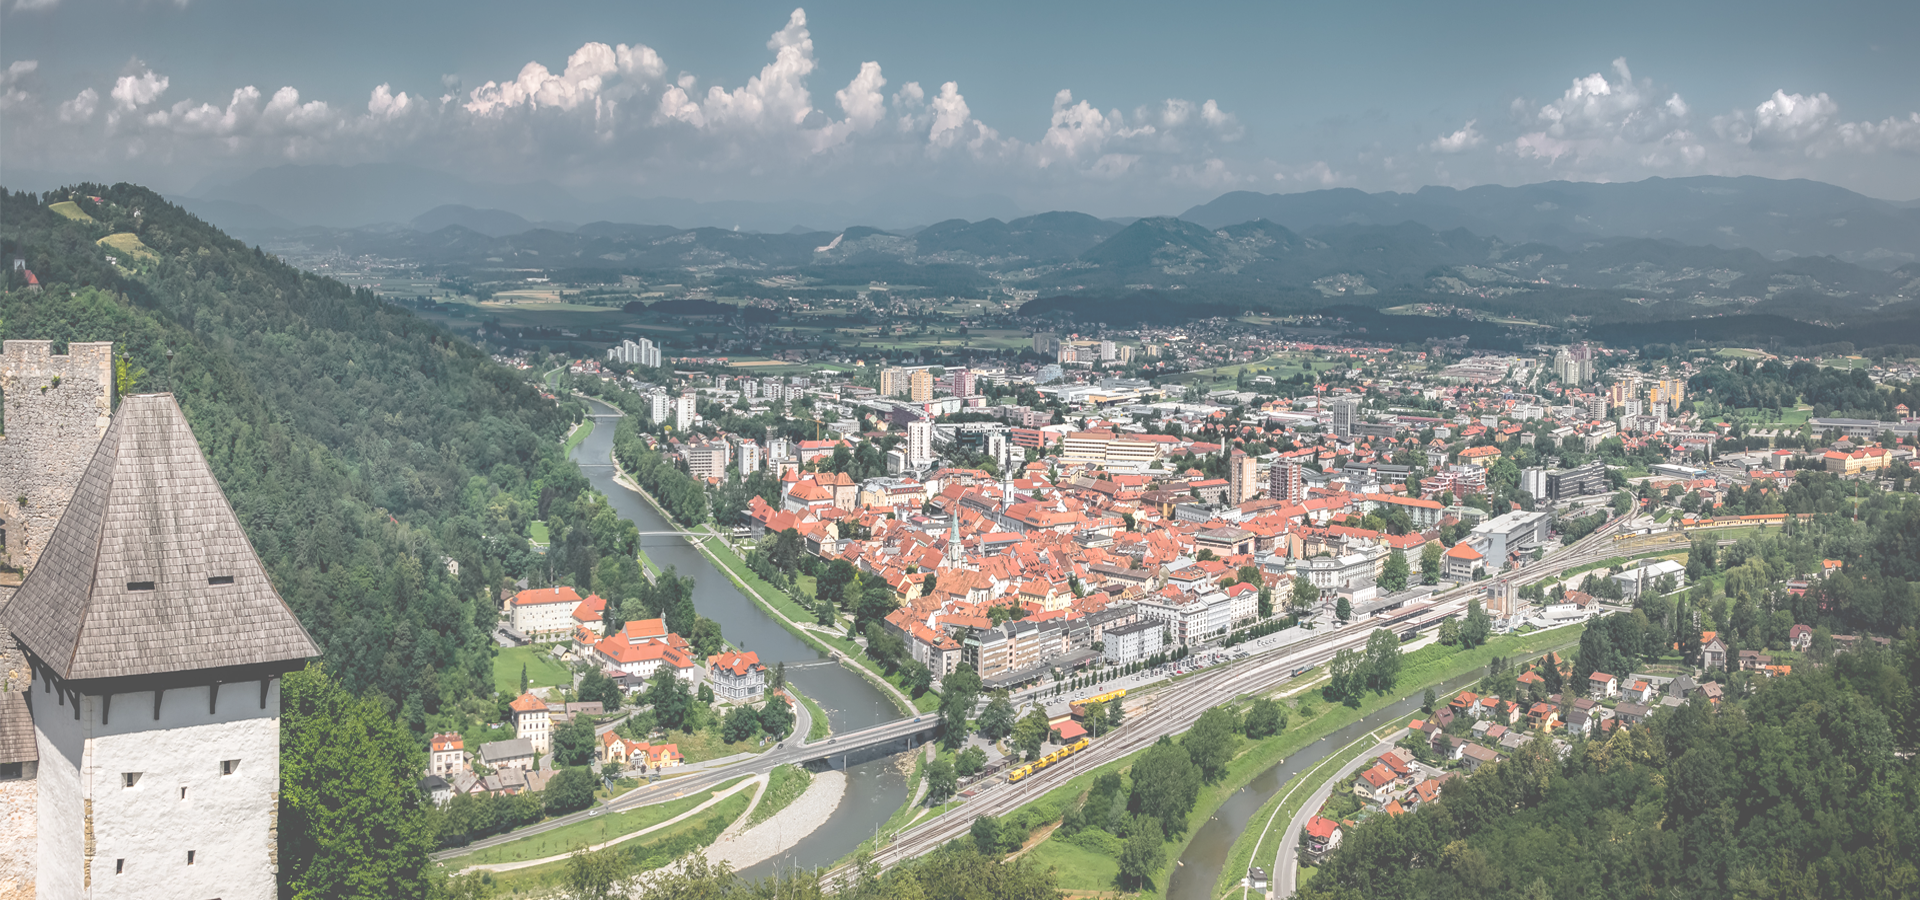 <b>Celje, Slovenia</b>